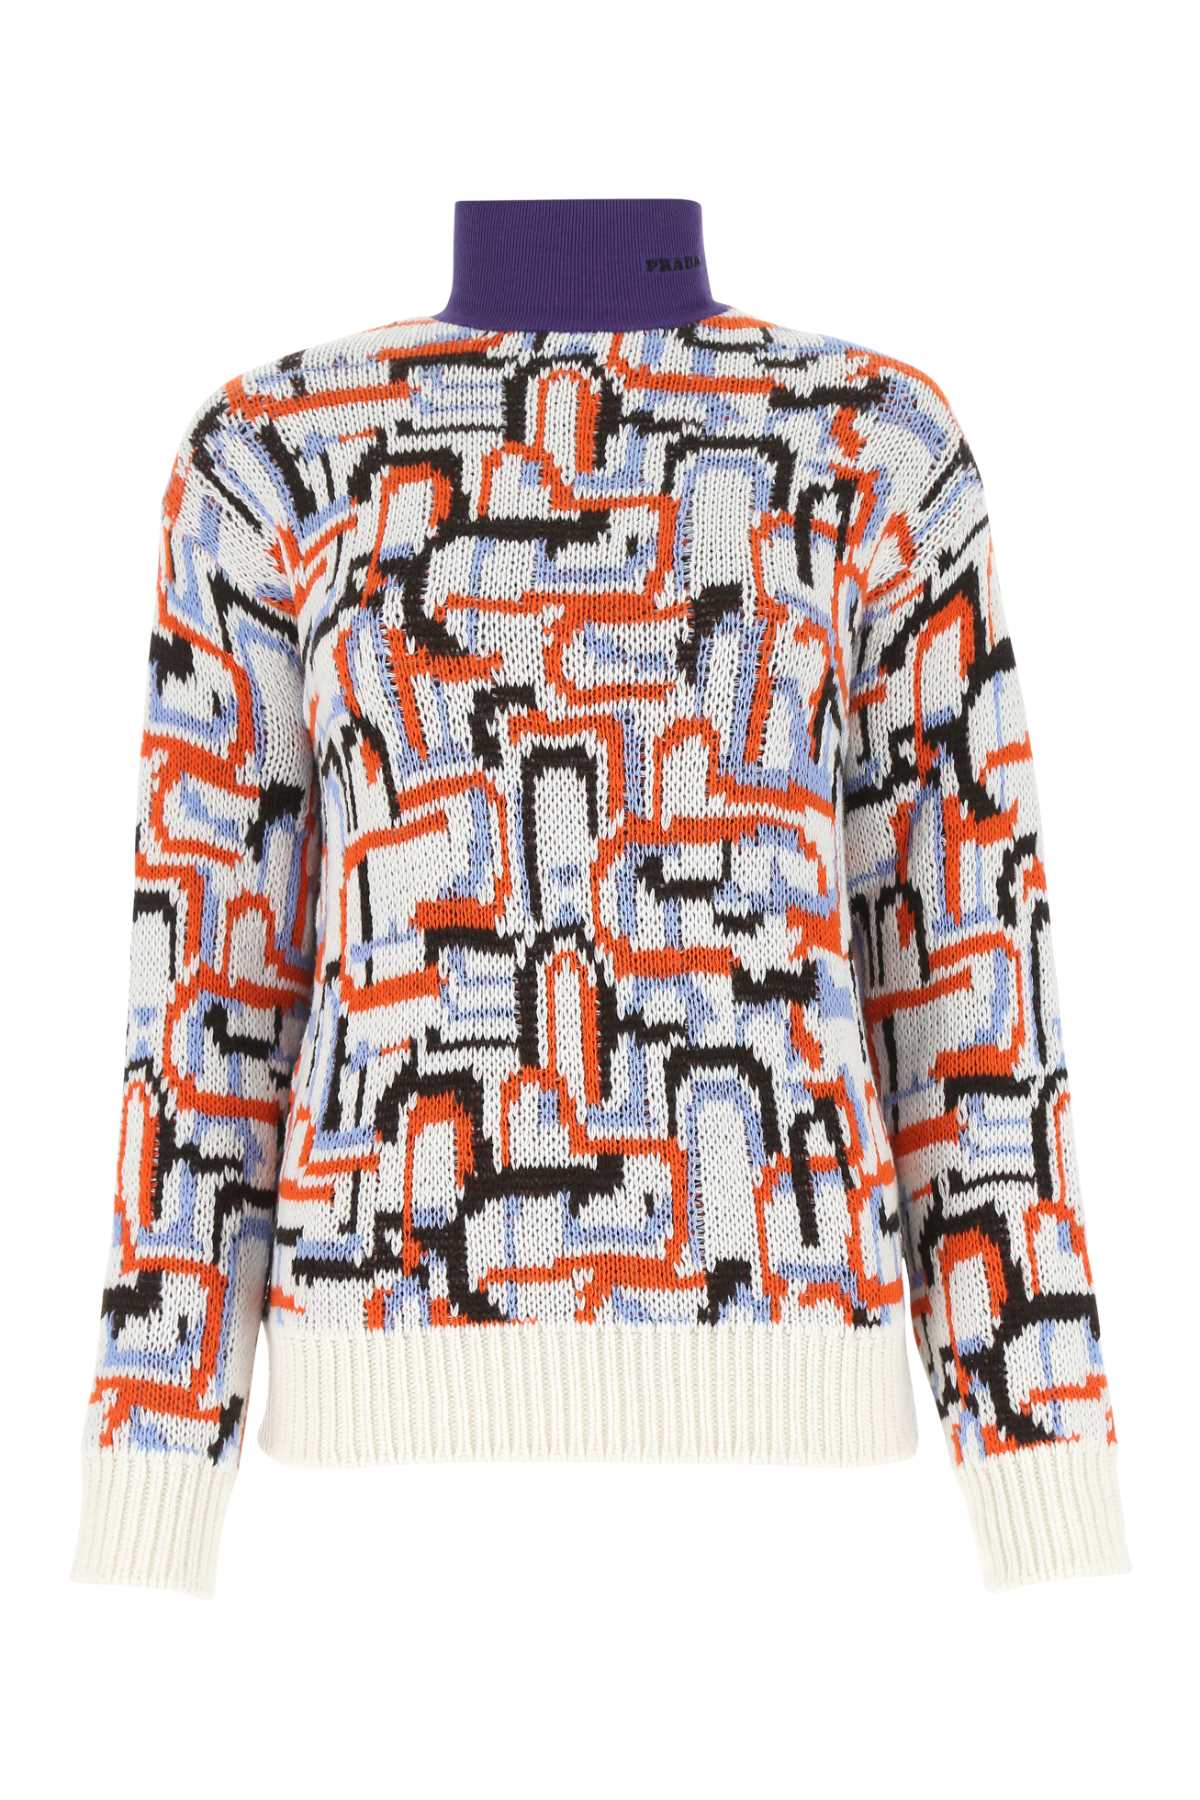 Prada Embroidered Wool Blend Sweater